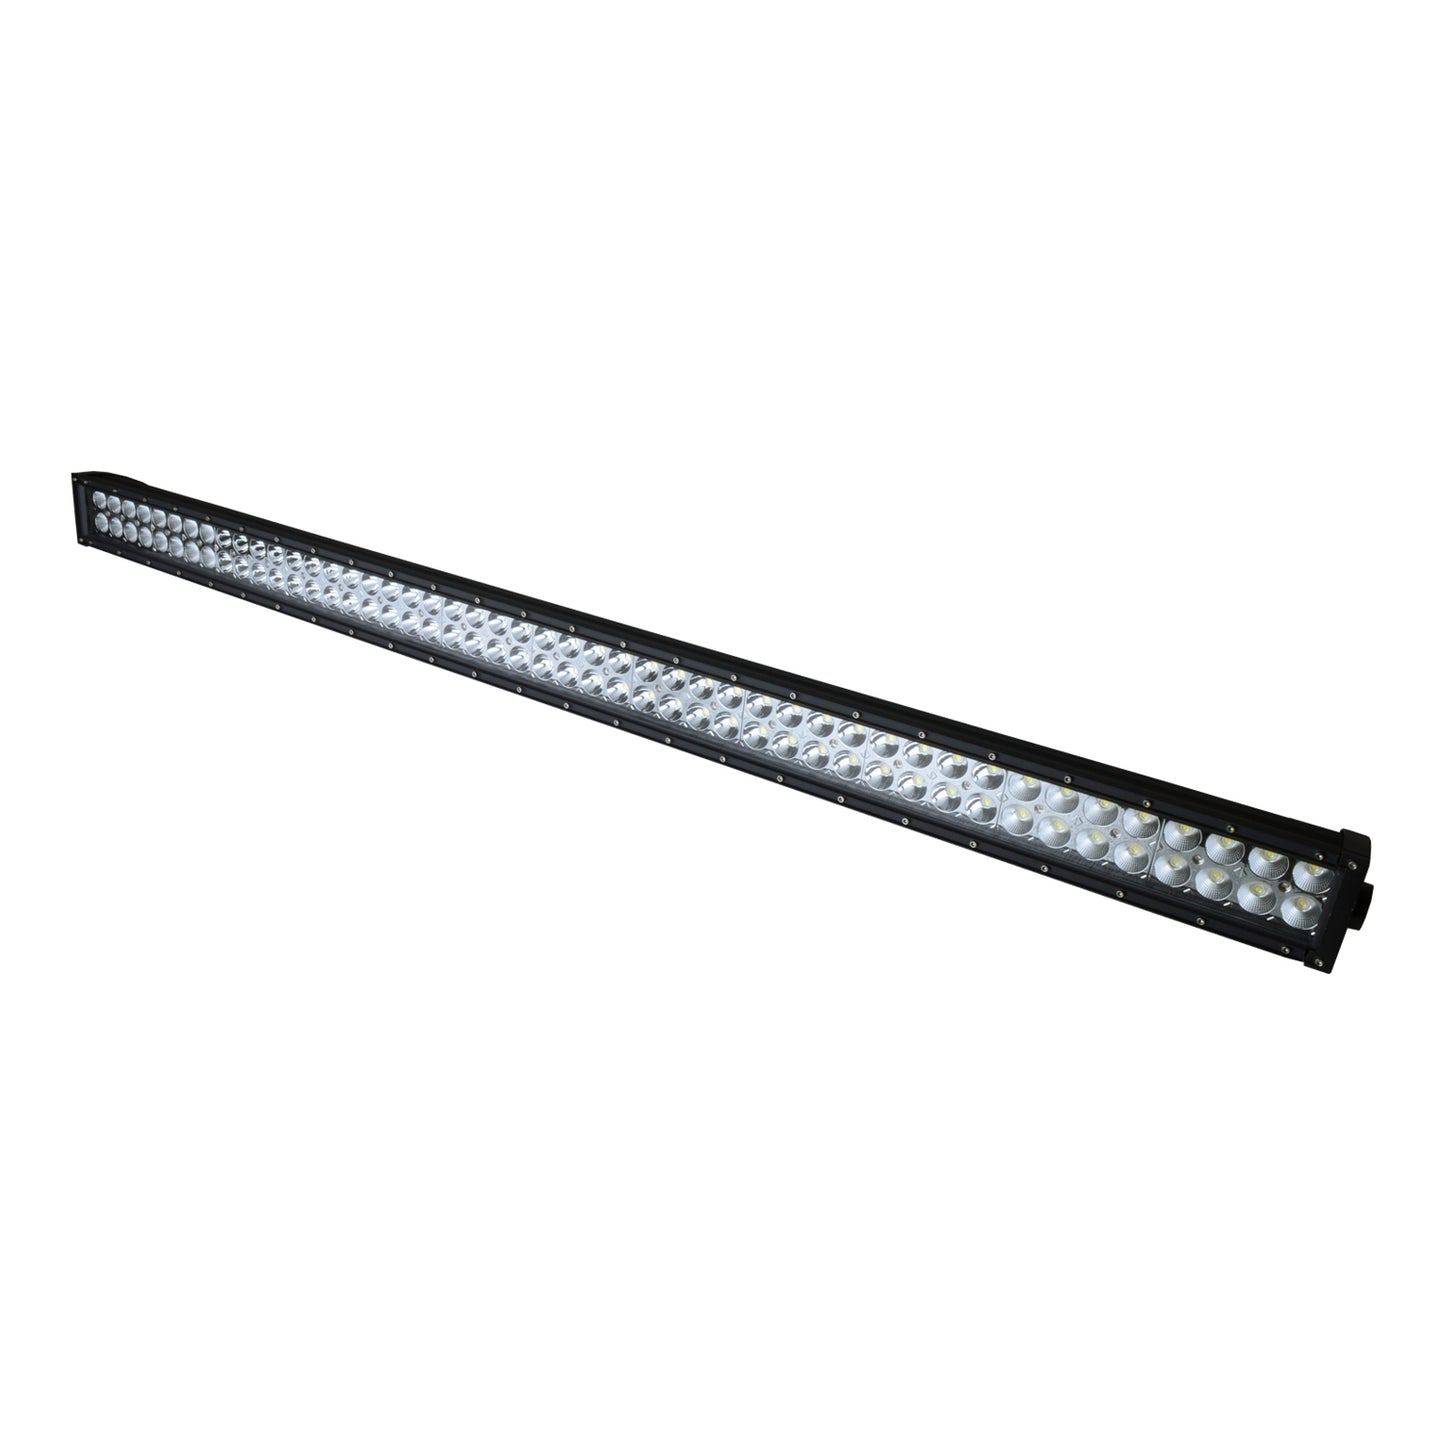 NL-LBR353-288W - 53" LED Light Bar